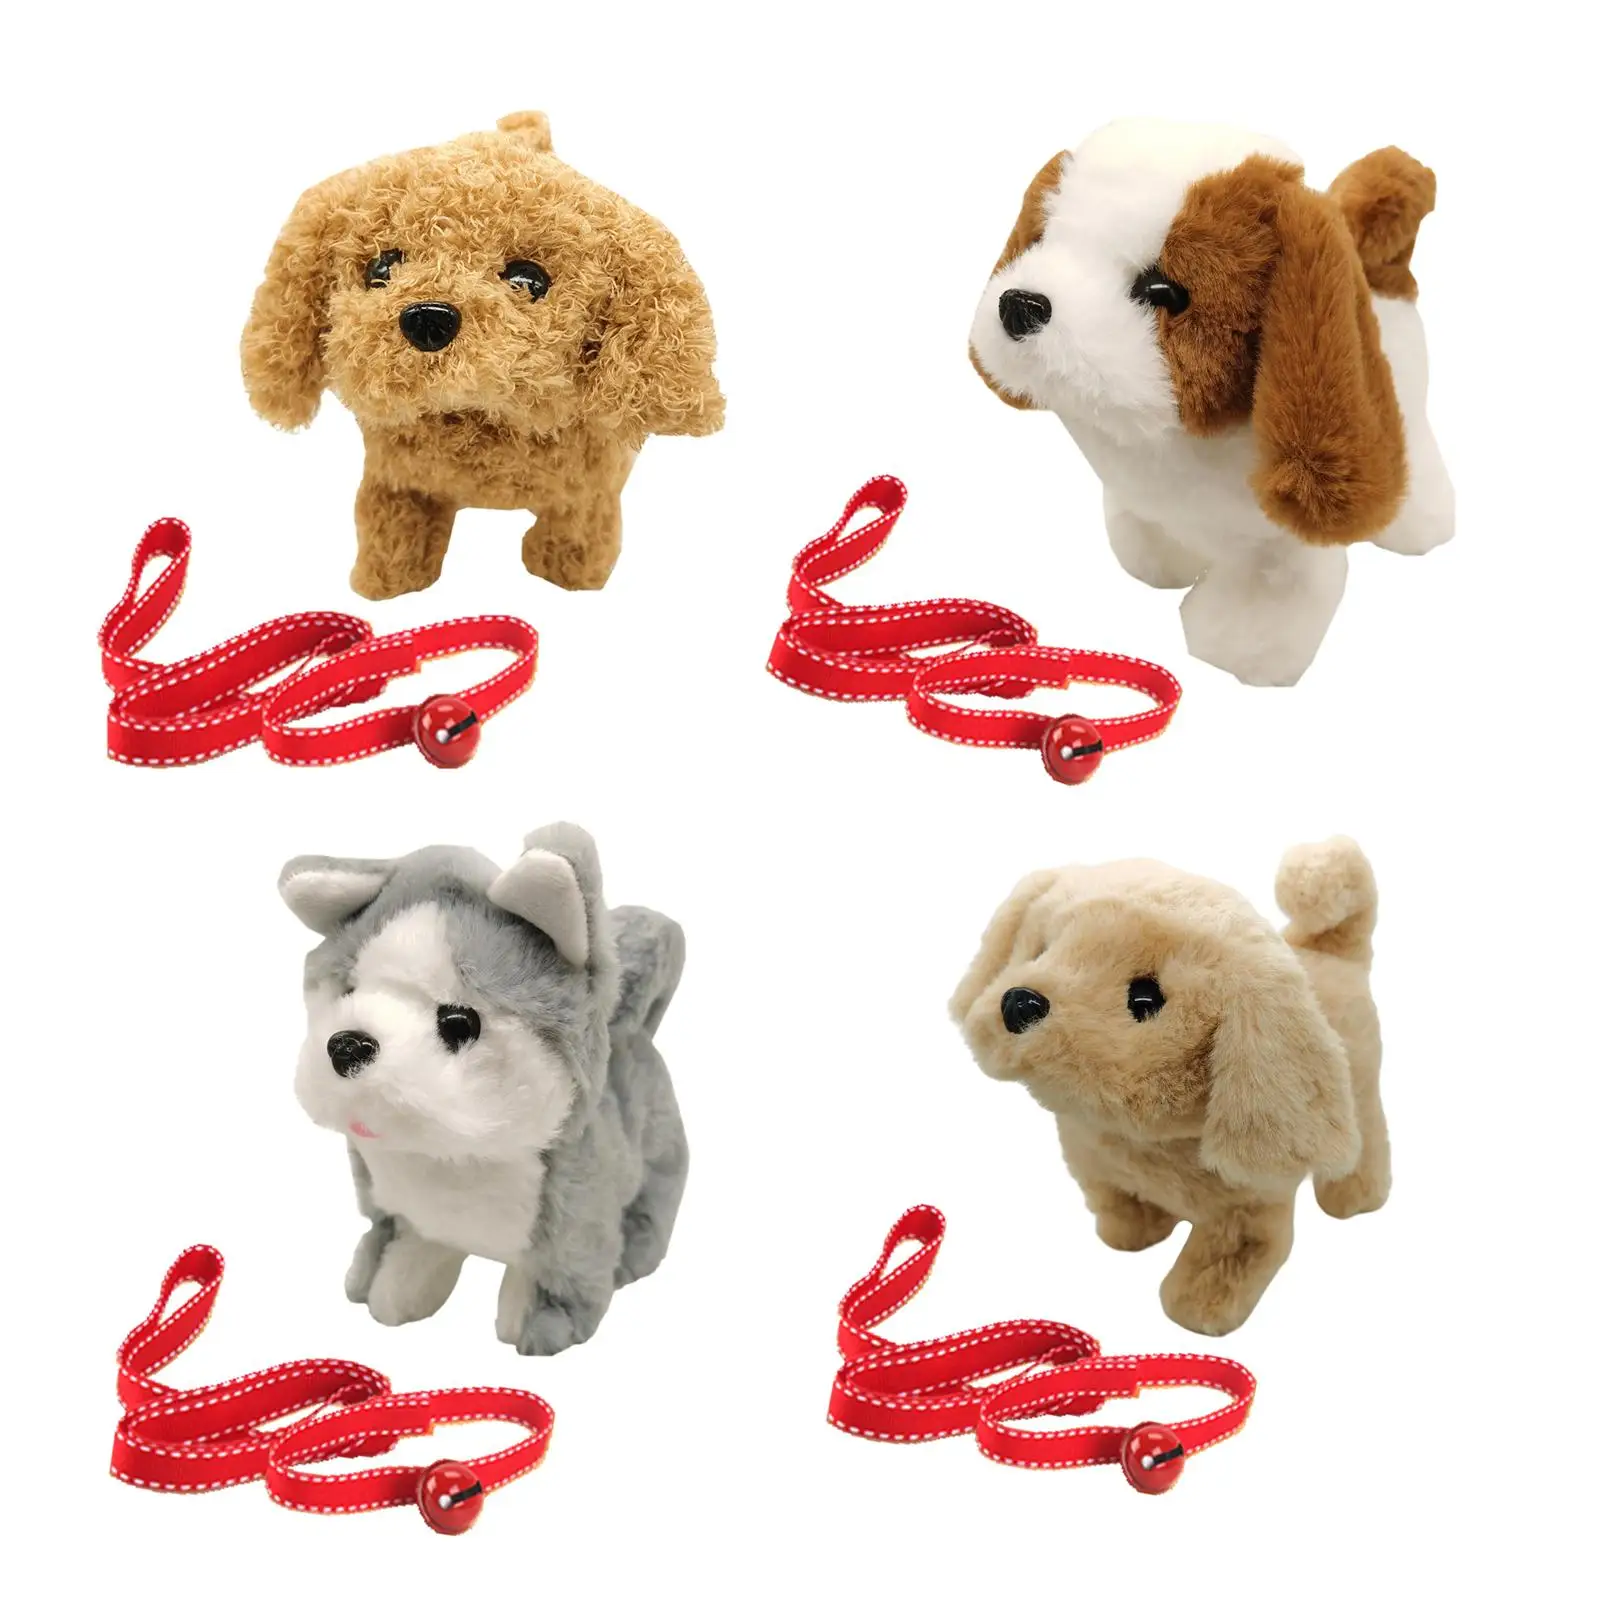 2x Electronic Plush Dog Interactive Vivid Toy for Kid`s Christmas Gift